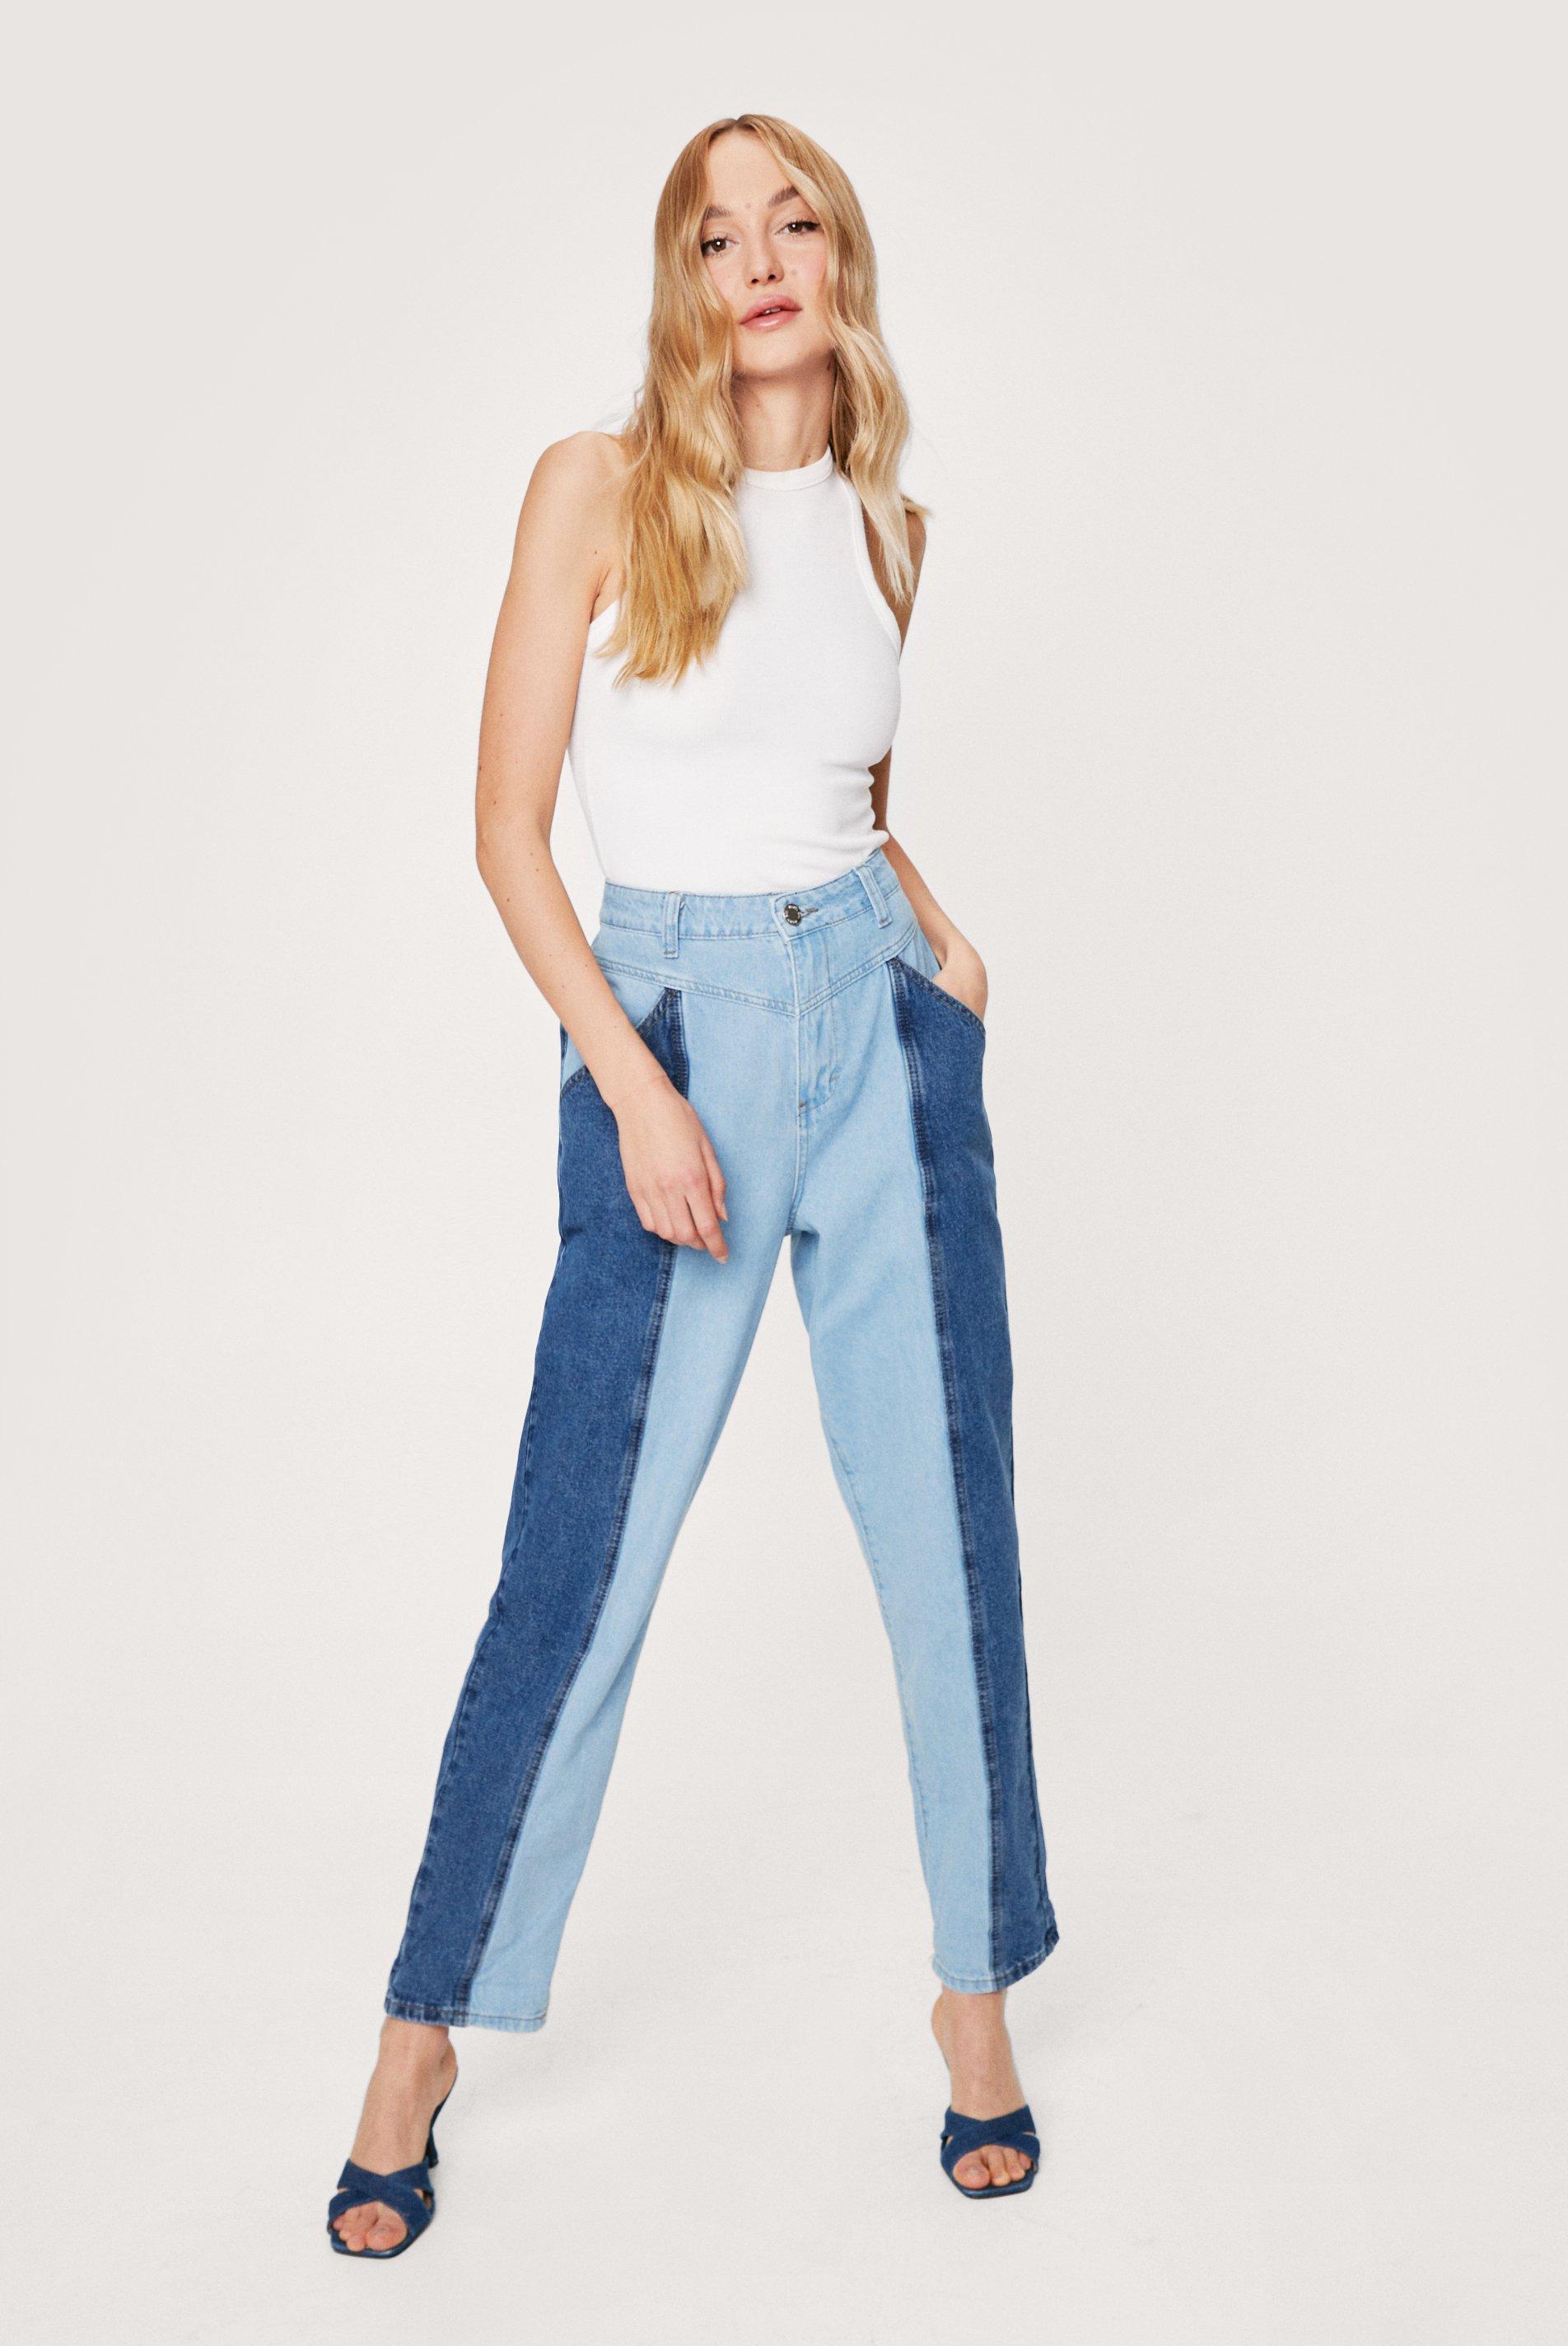 oddy jeans price